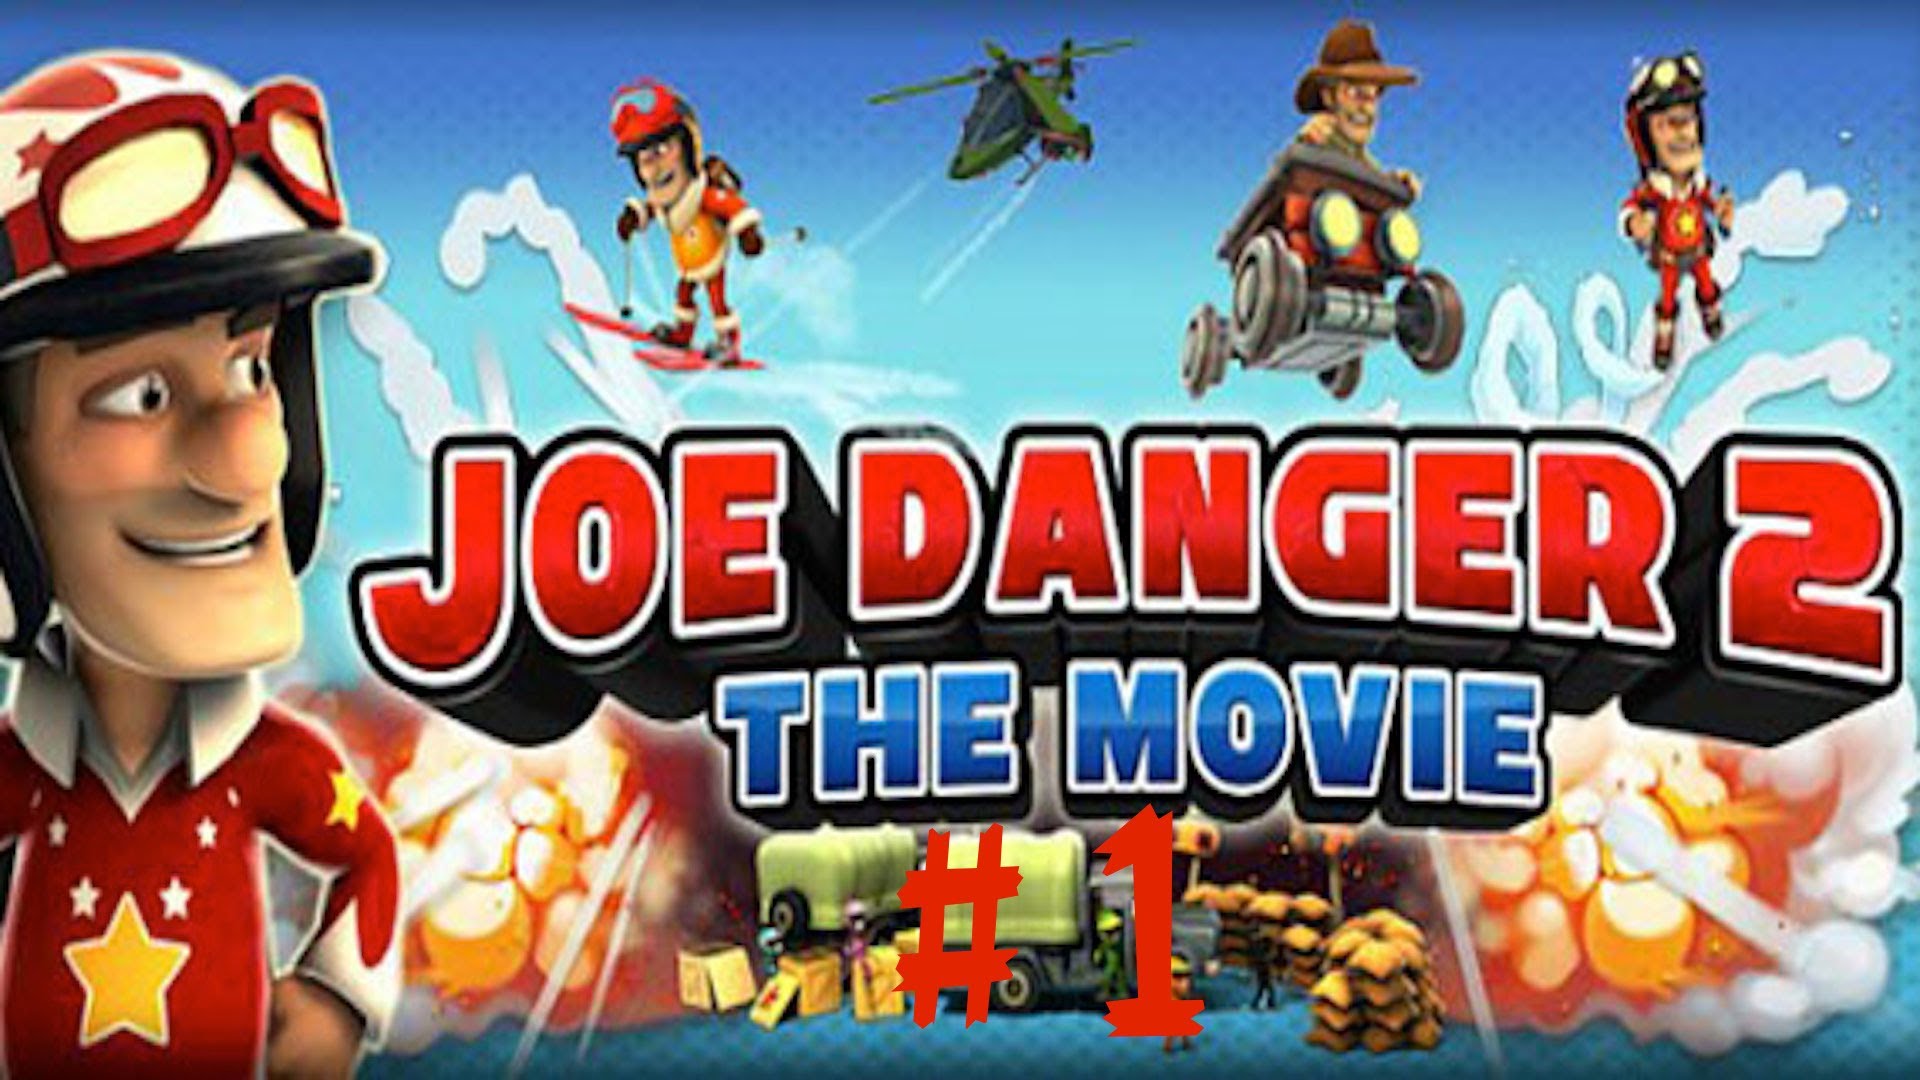 Joe Danger 2: The Movie #26